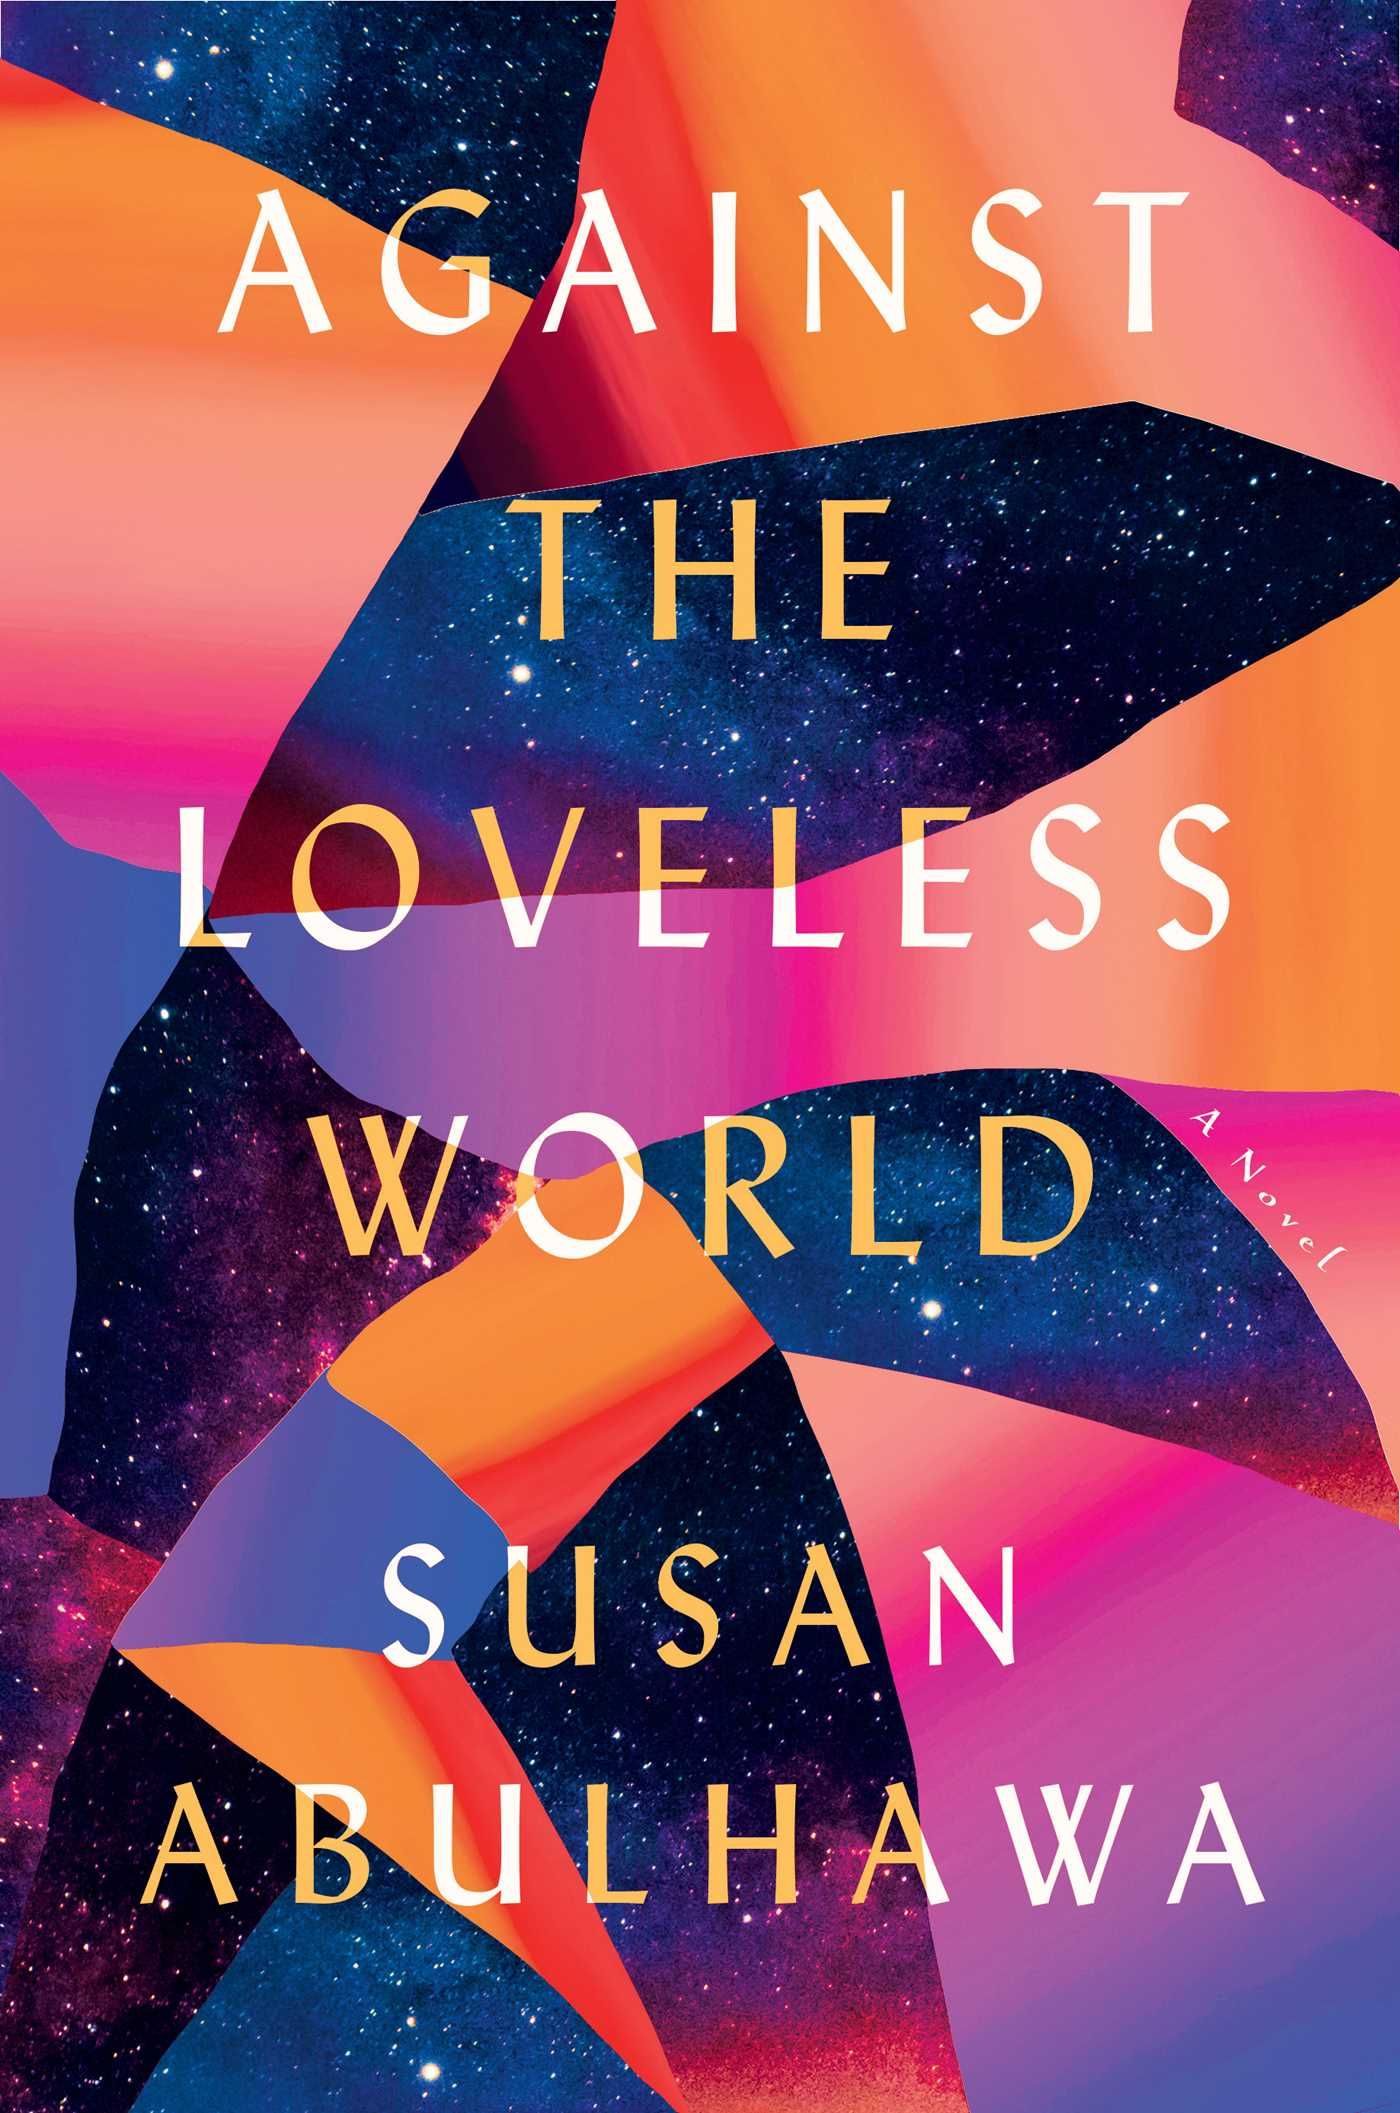 Susan Abulhawa: Against the Loveless World (2020, Atria Books)